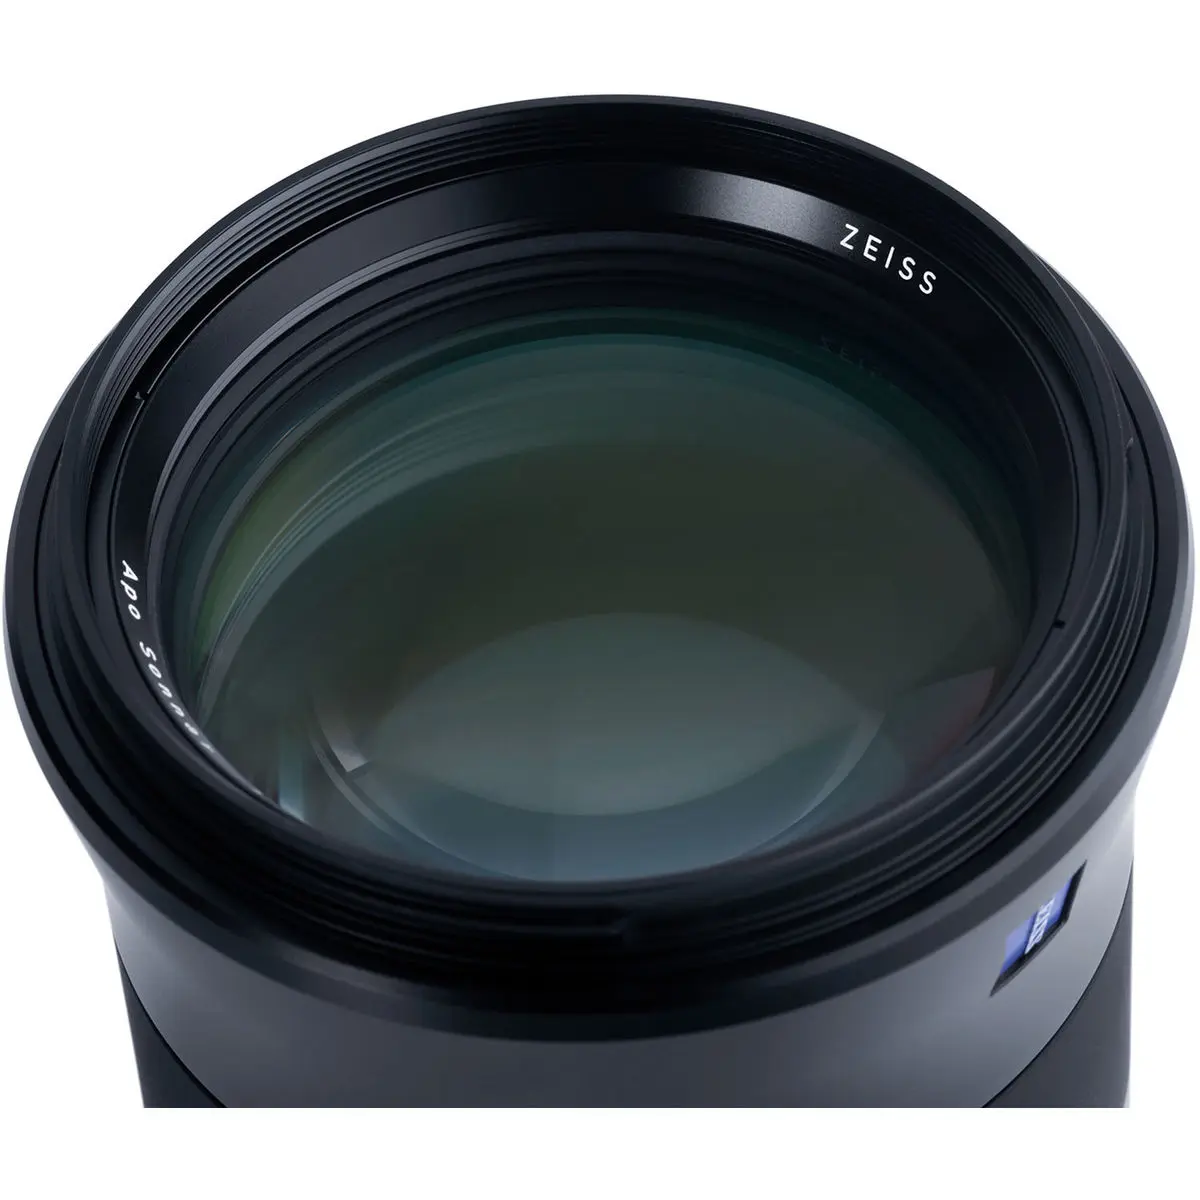 11. Carl Zeiss Otus 1.4/100 ZF.2 (Nikon) Lens